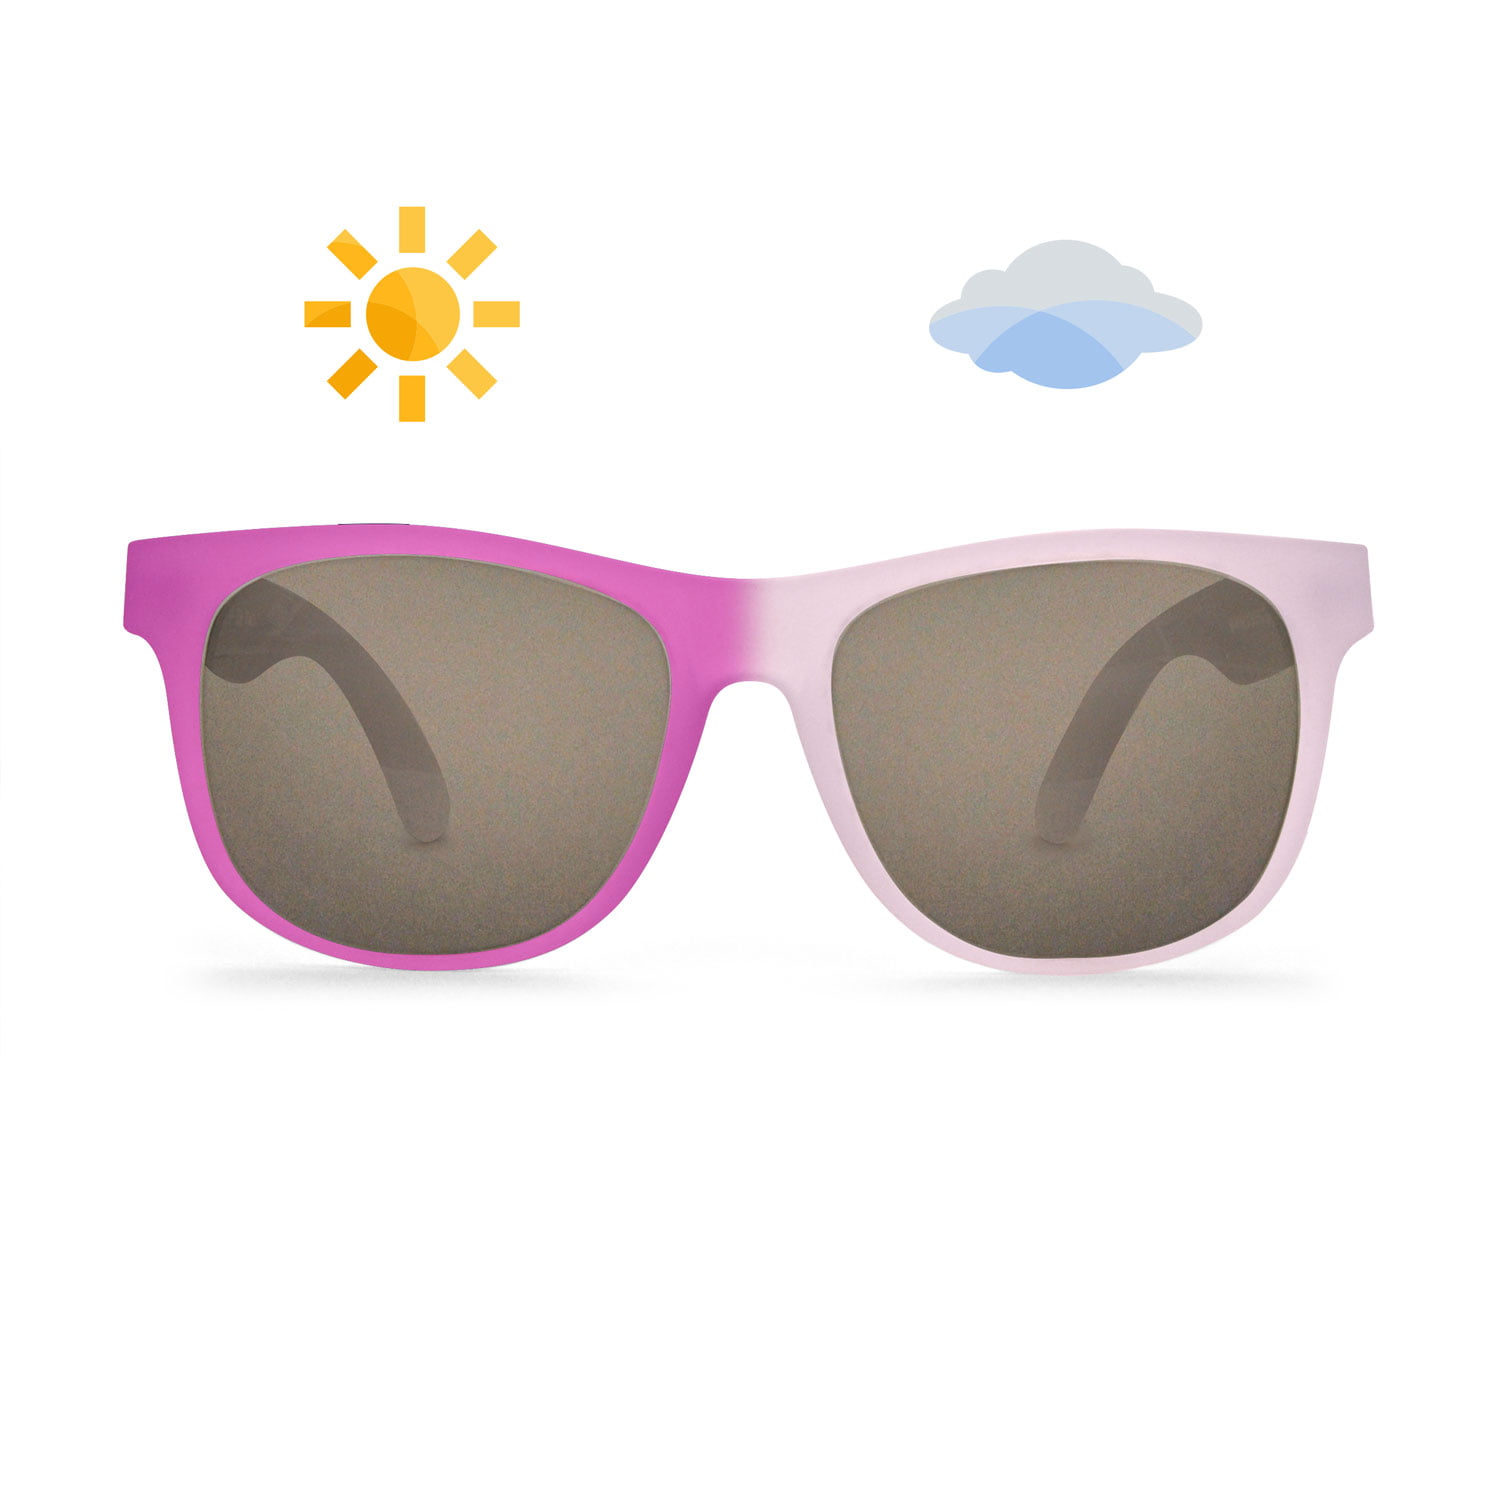 Sunglasses Lens Color Guide | Choosing the Right Shade-bdsngoinhaviet.com.vn